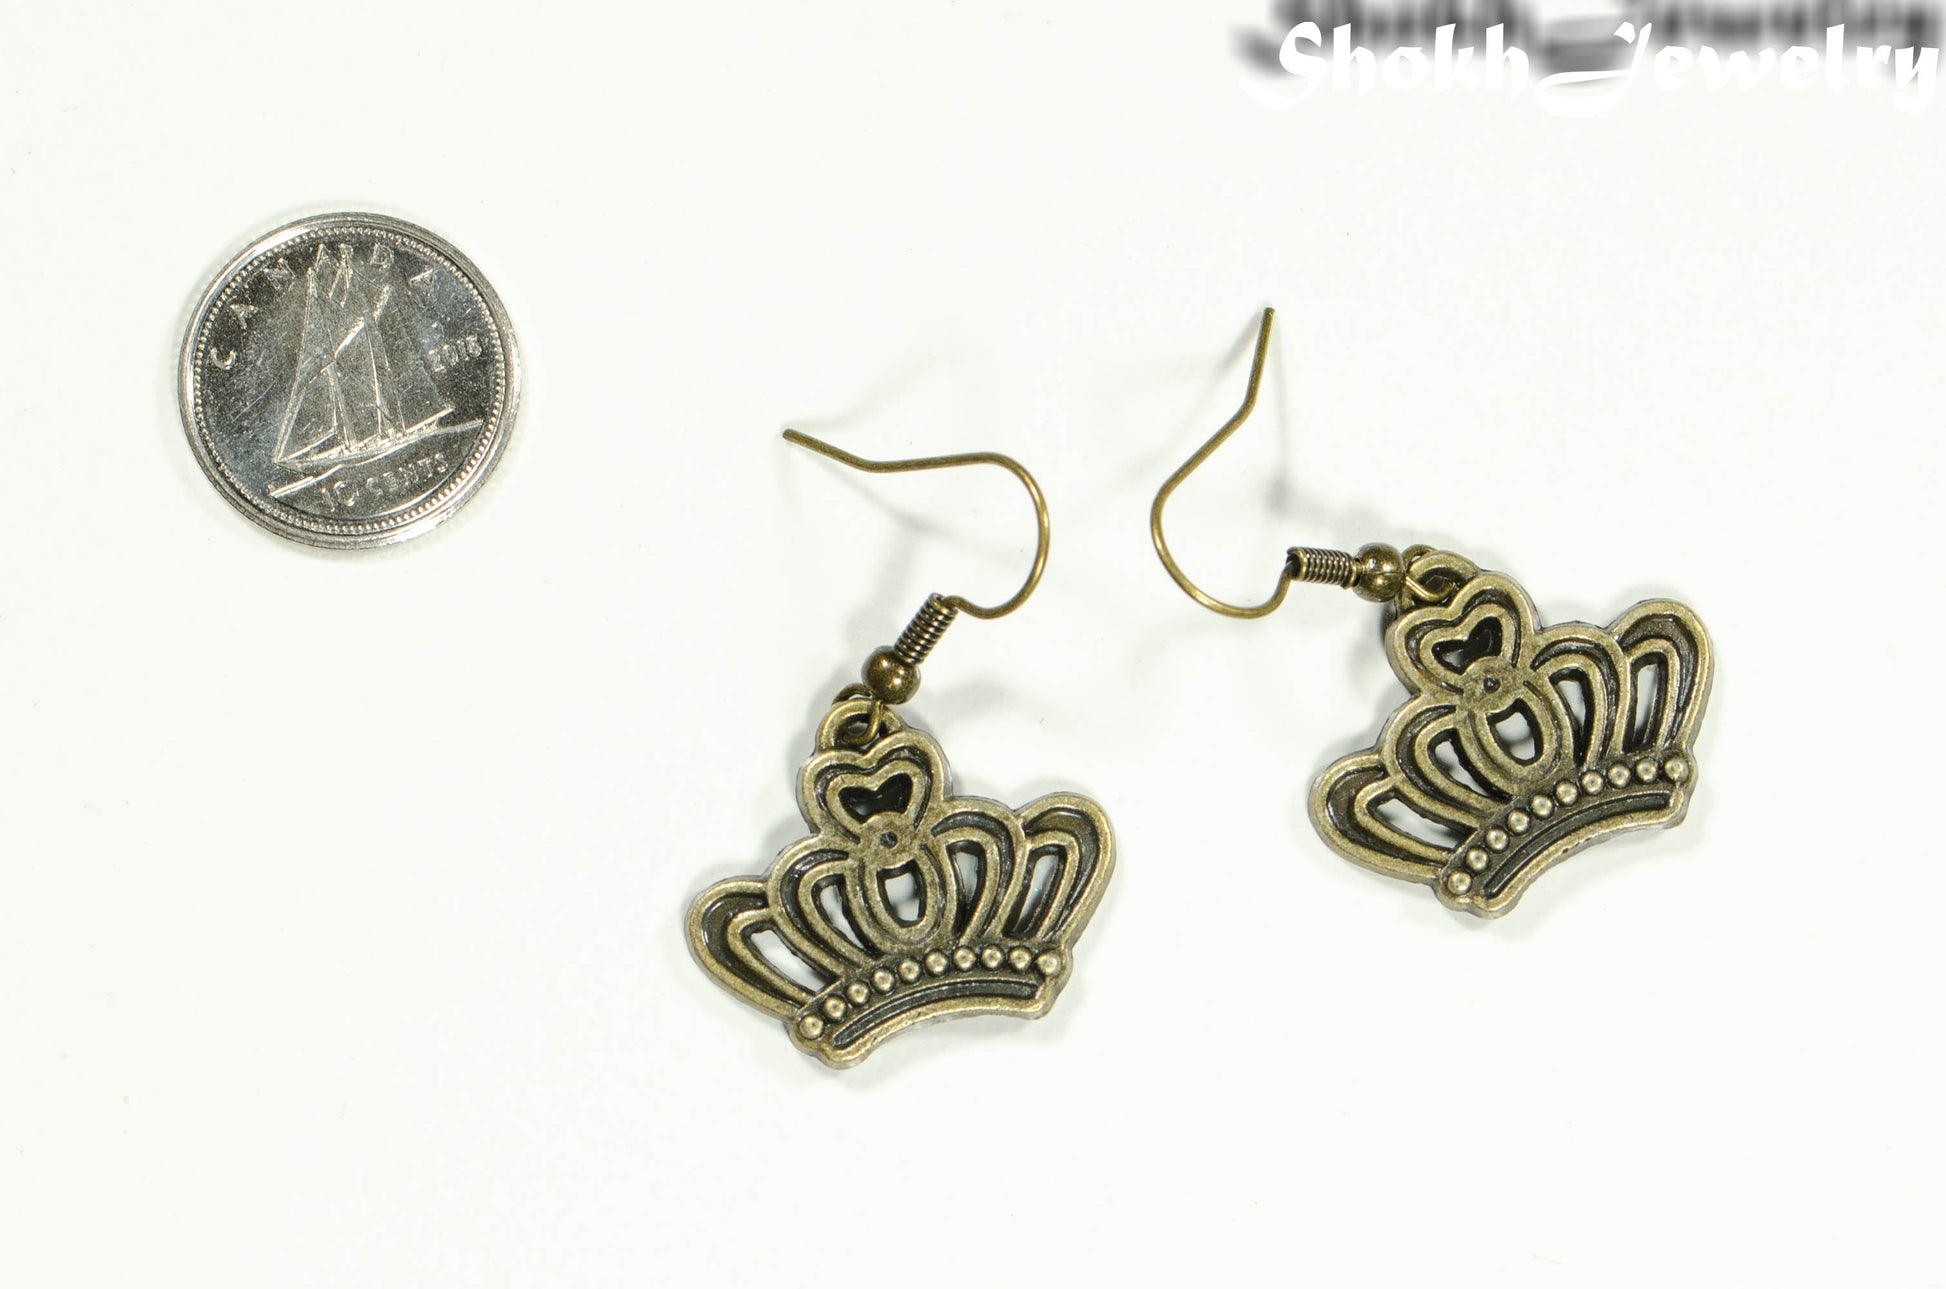 Antique Bronze Crown Charm Earrings beside a dime.